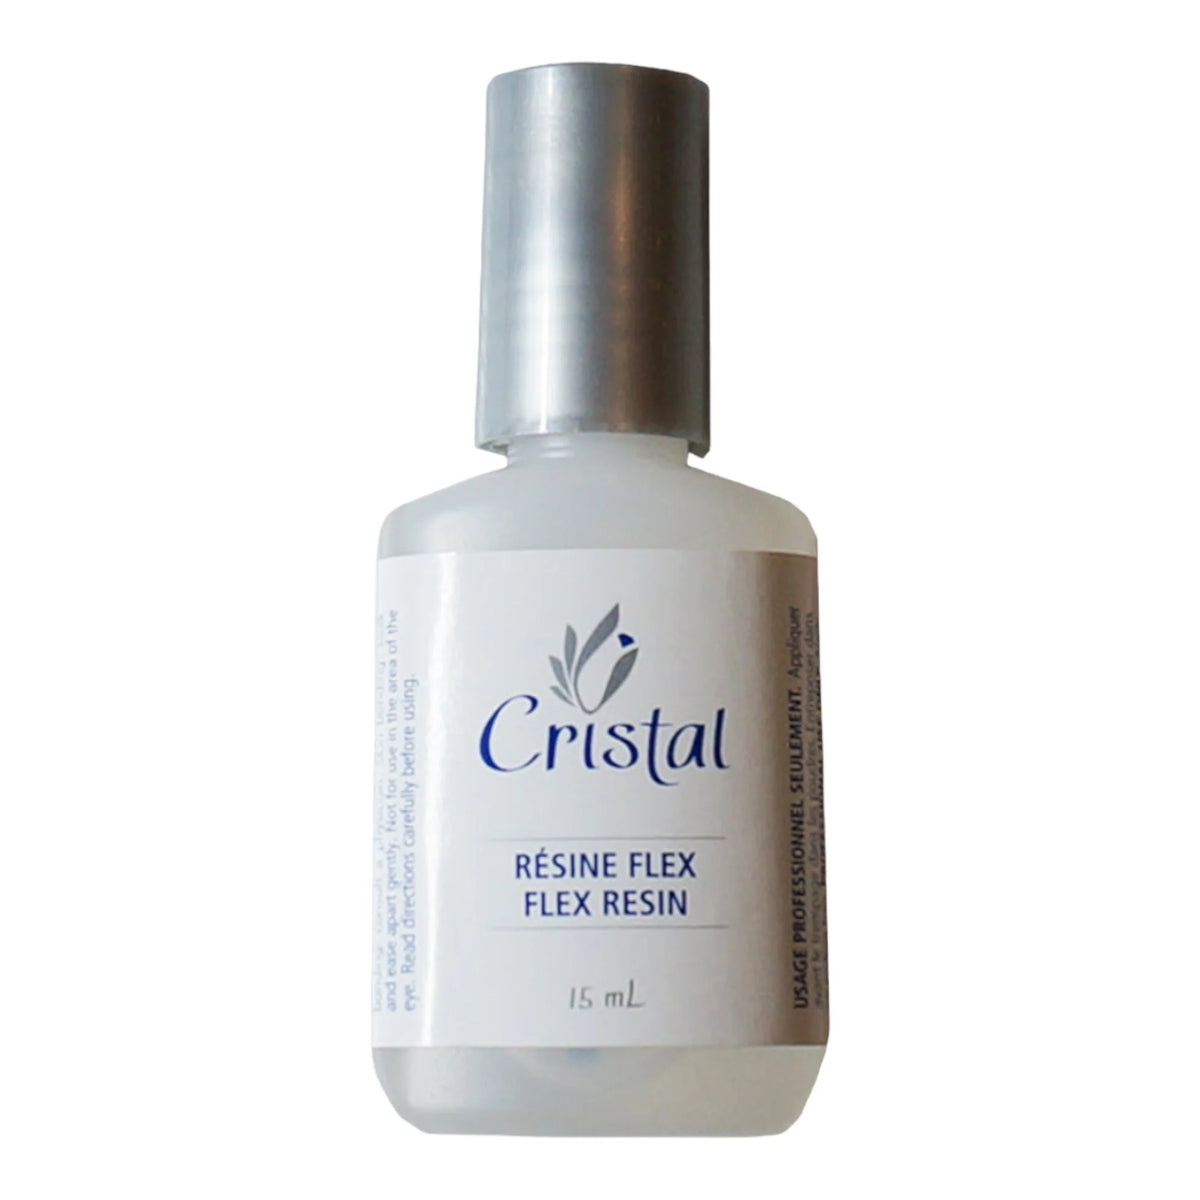 Cristal-Flex Resin